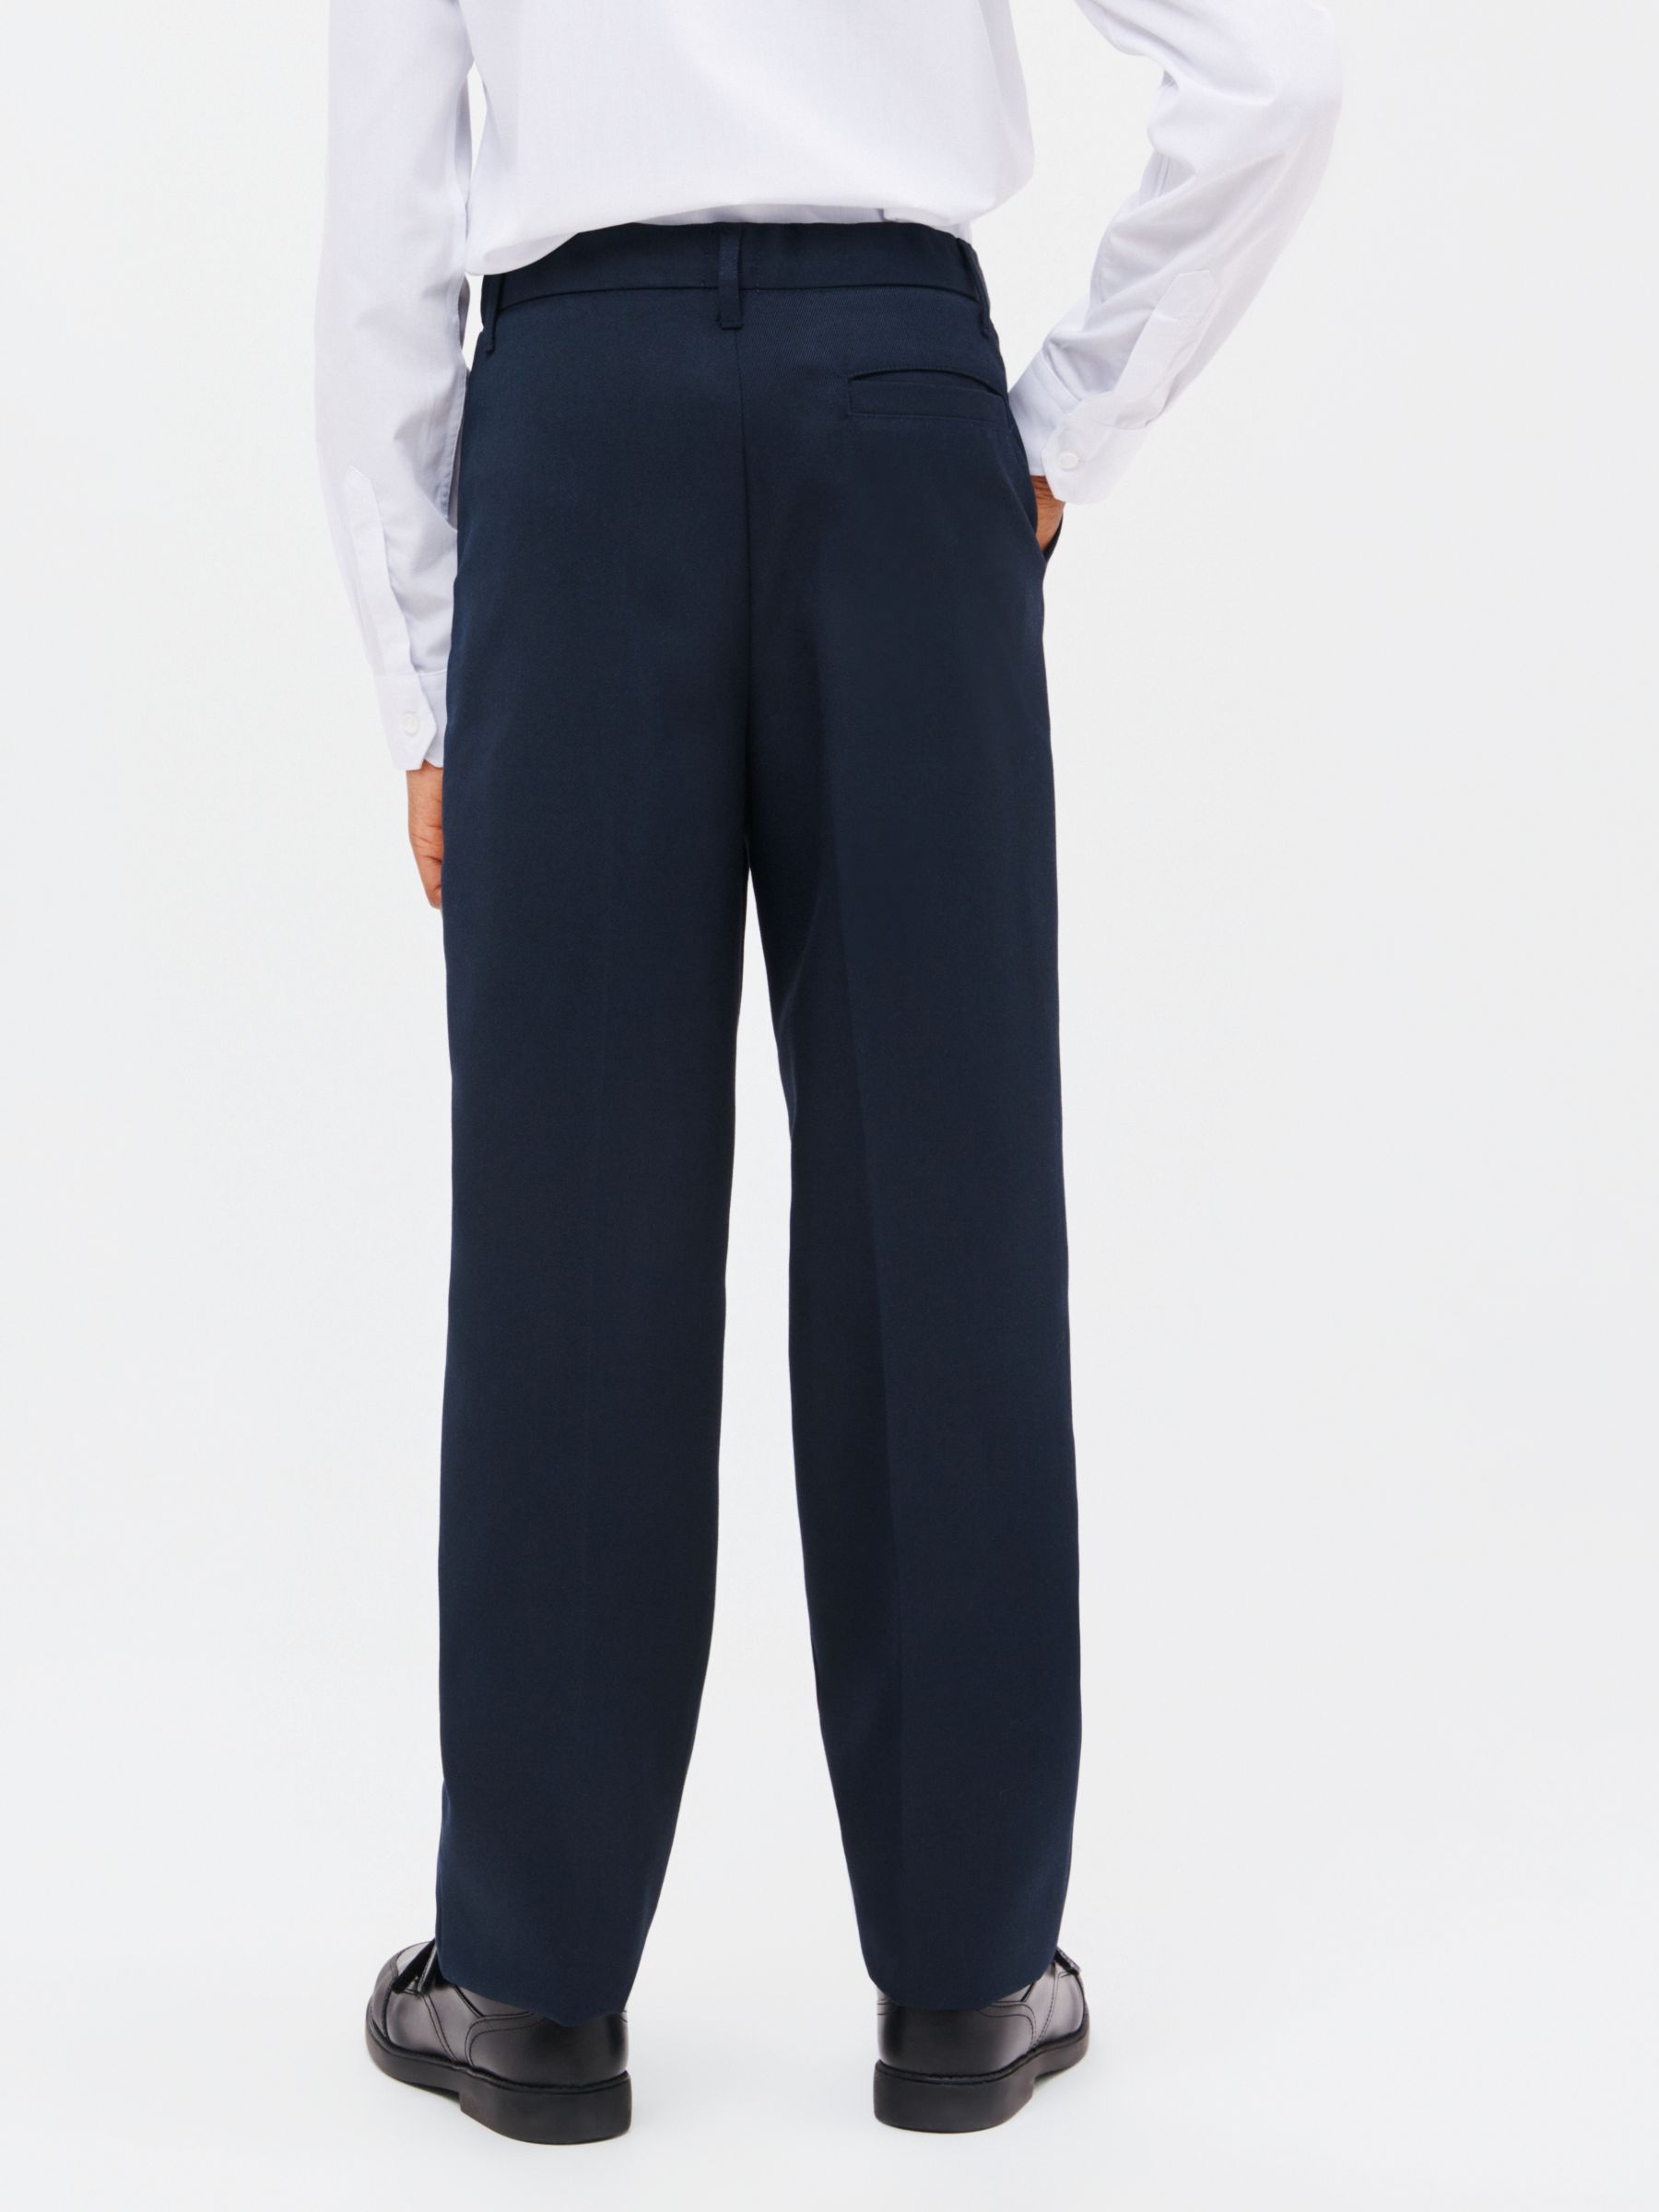 John Lewis Kids' Regular Fit Long Length School Trousers, Navy